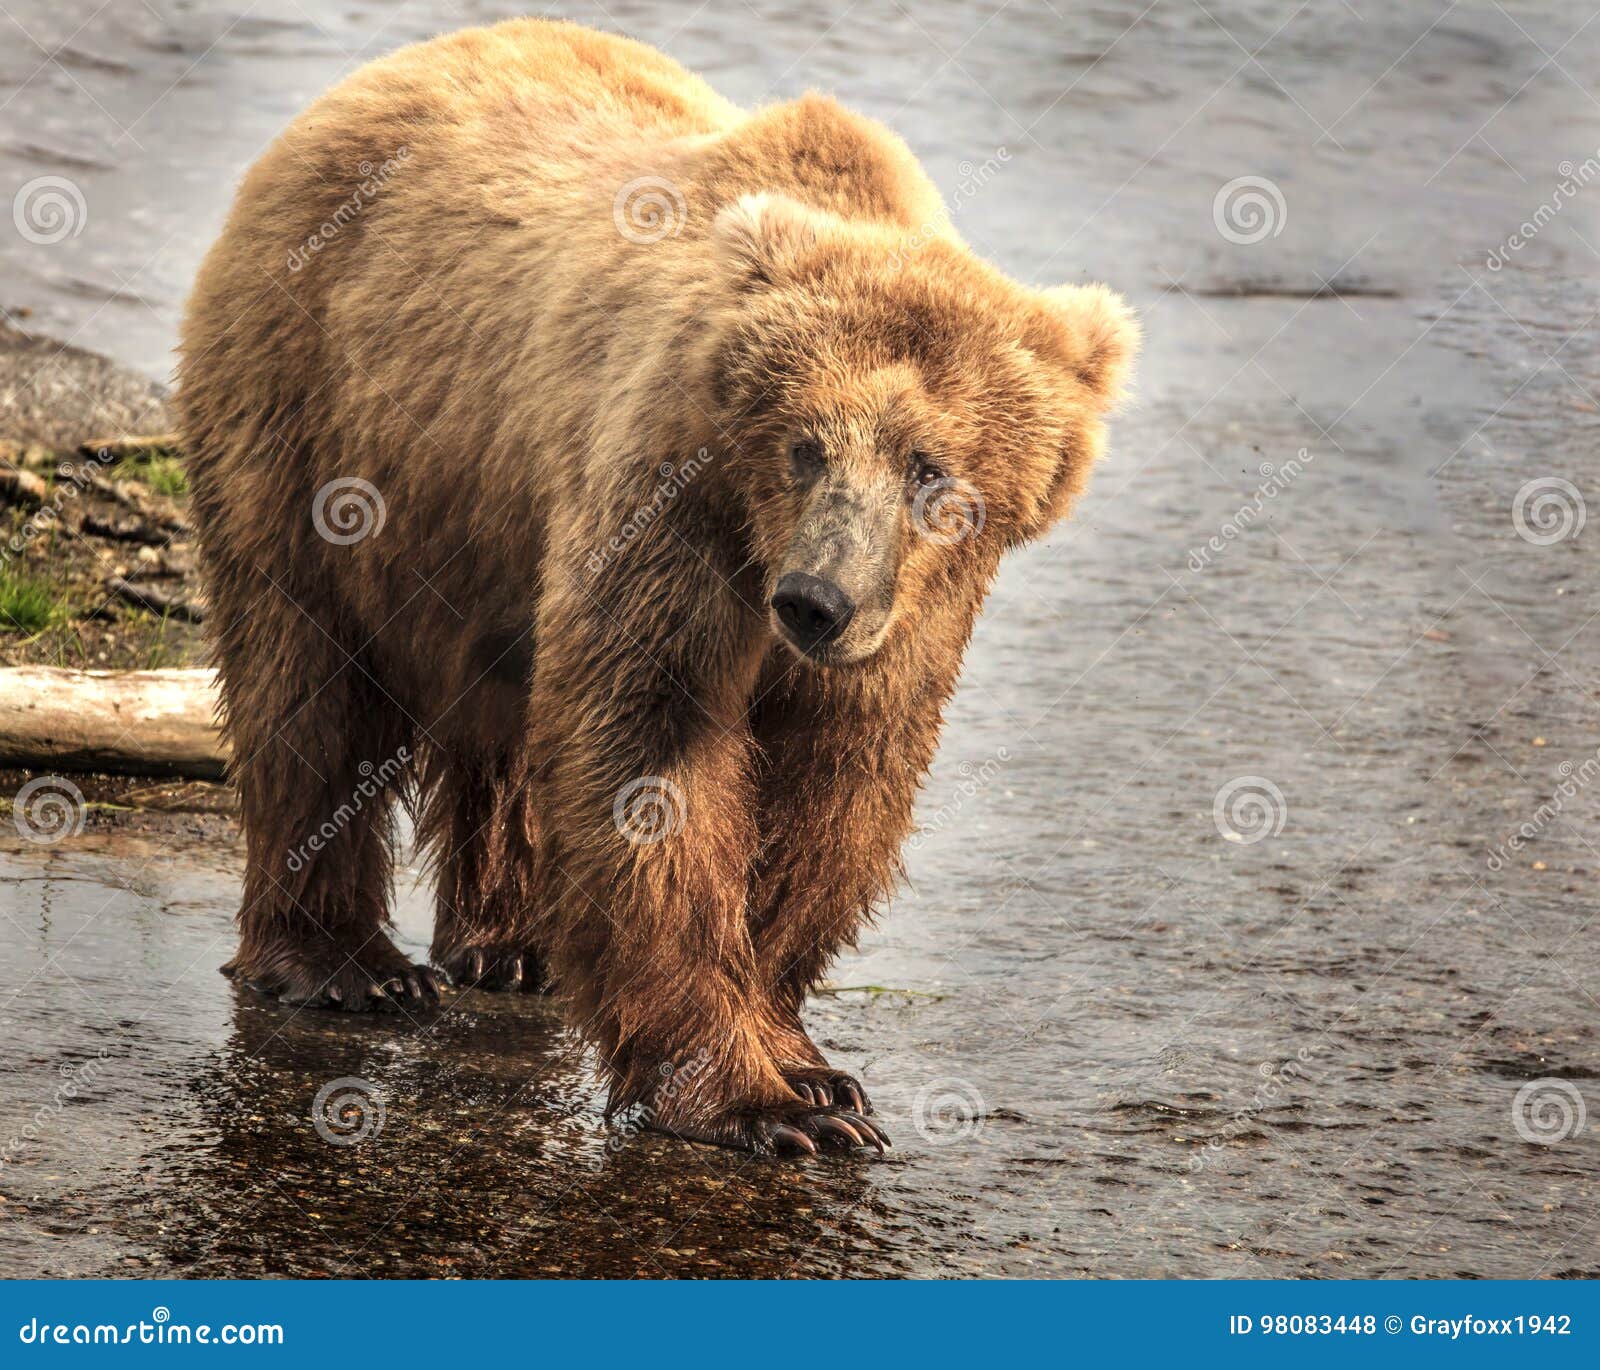 katmai brown bears; brooks falls; alaska; usa